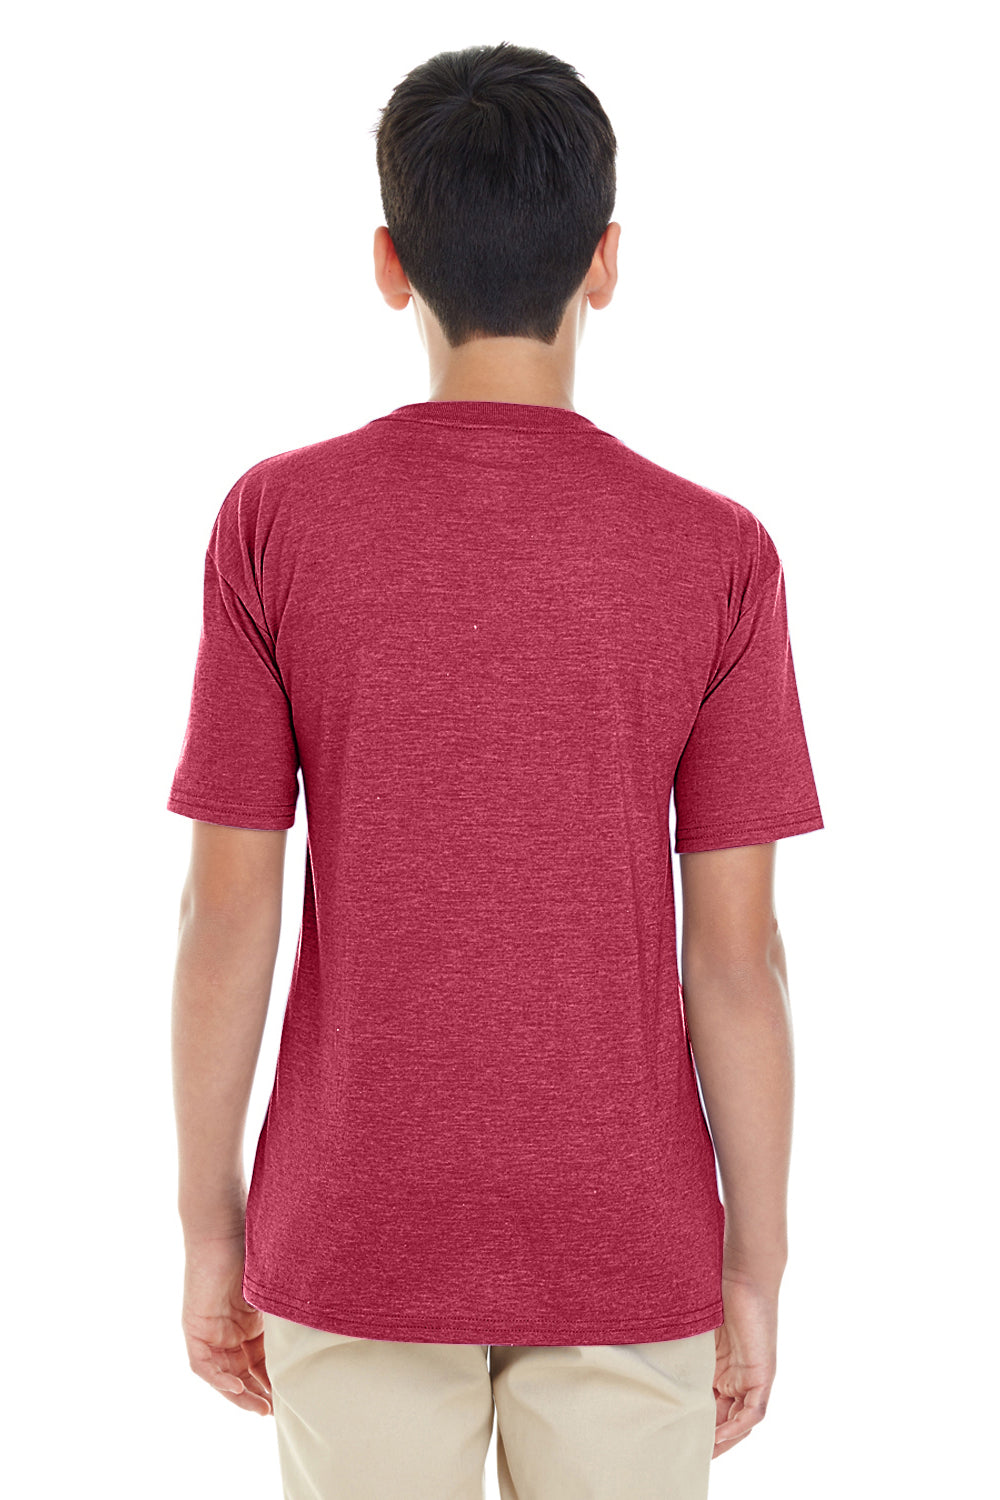 Gildan G645B Youth Softstyle Short Sleeve Crewneck T-Shirt Heather Cardinal Red Back